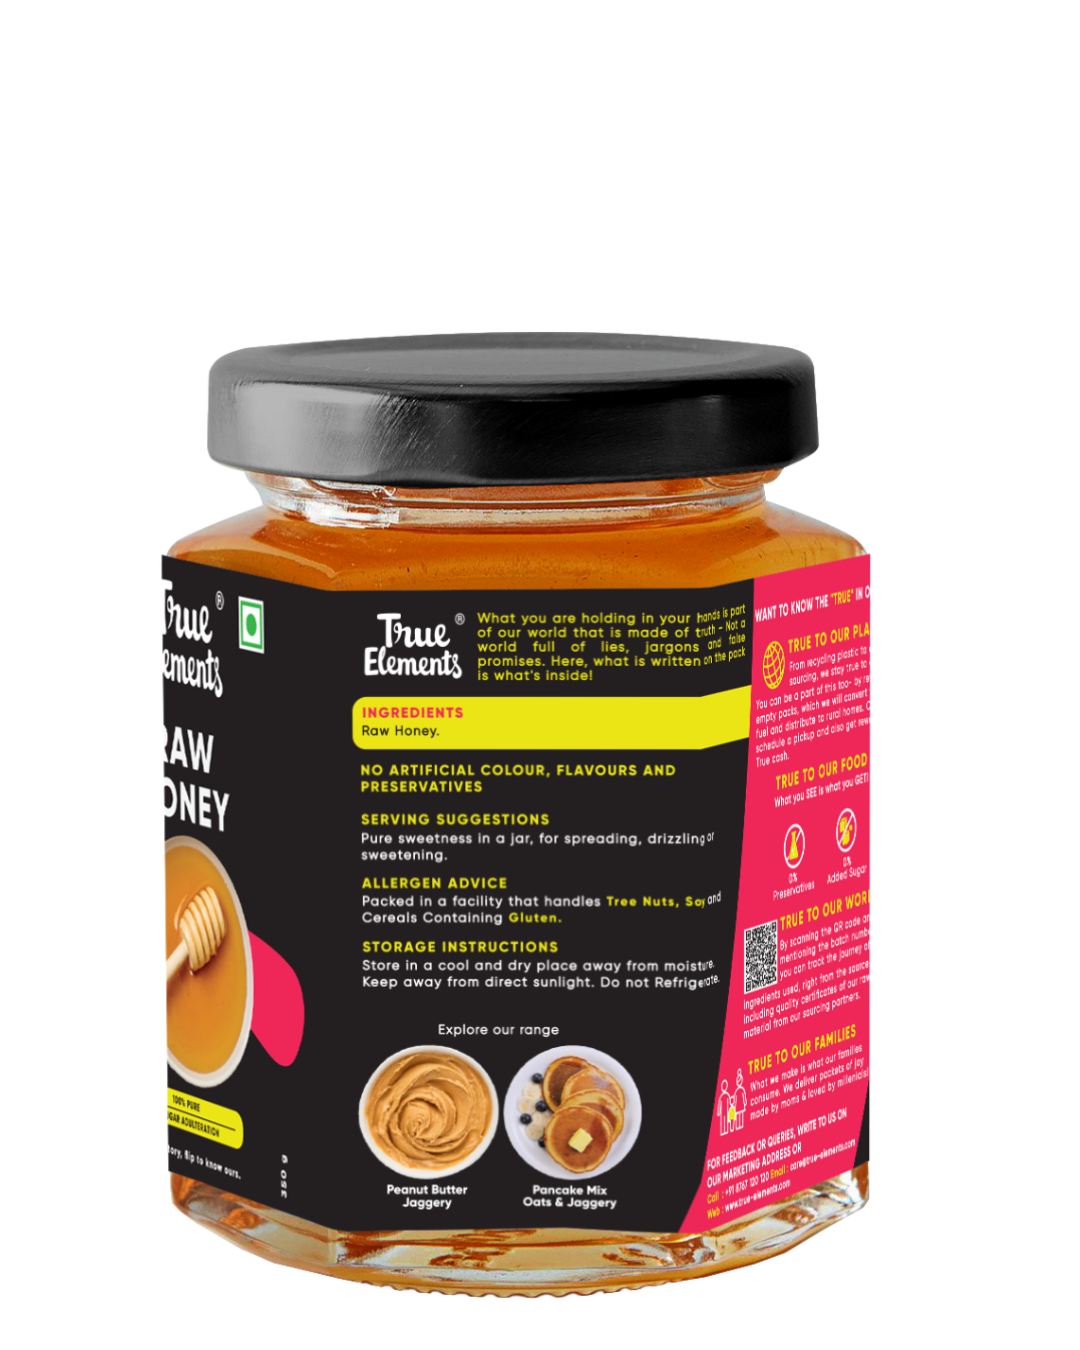 True Elements Raw Honey 350gm ingredients